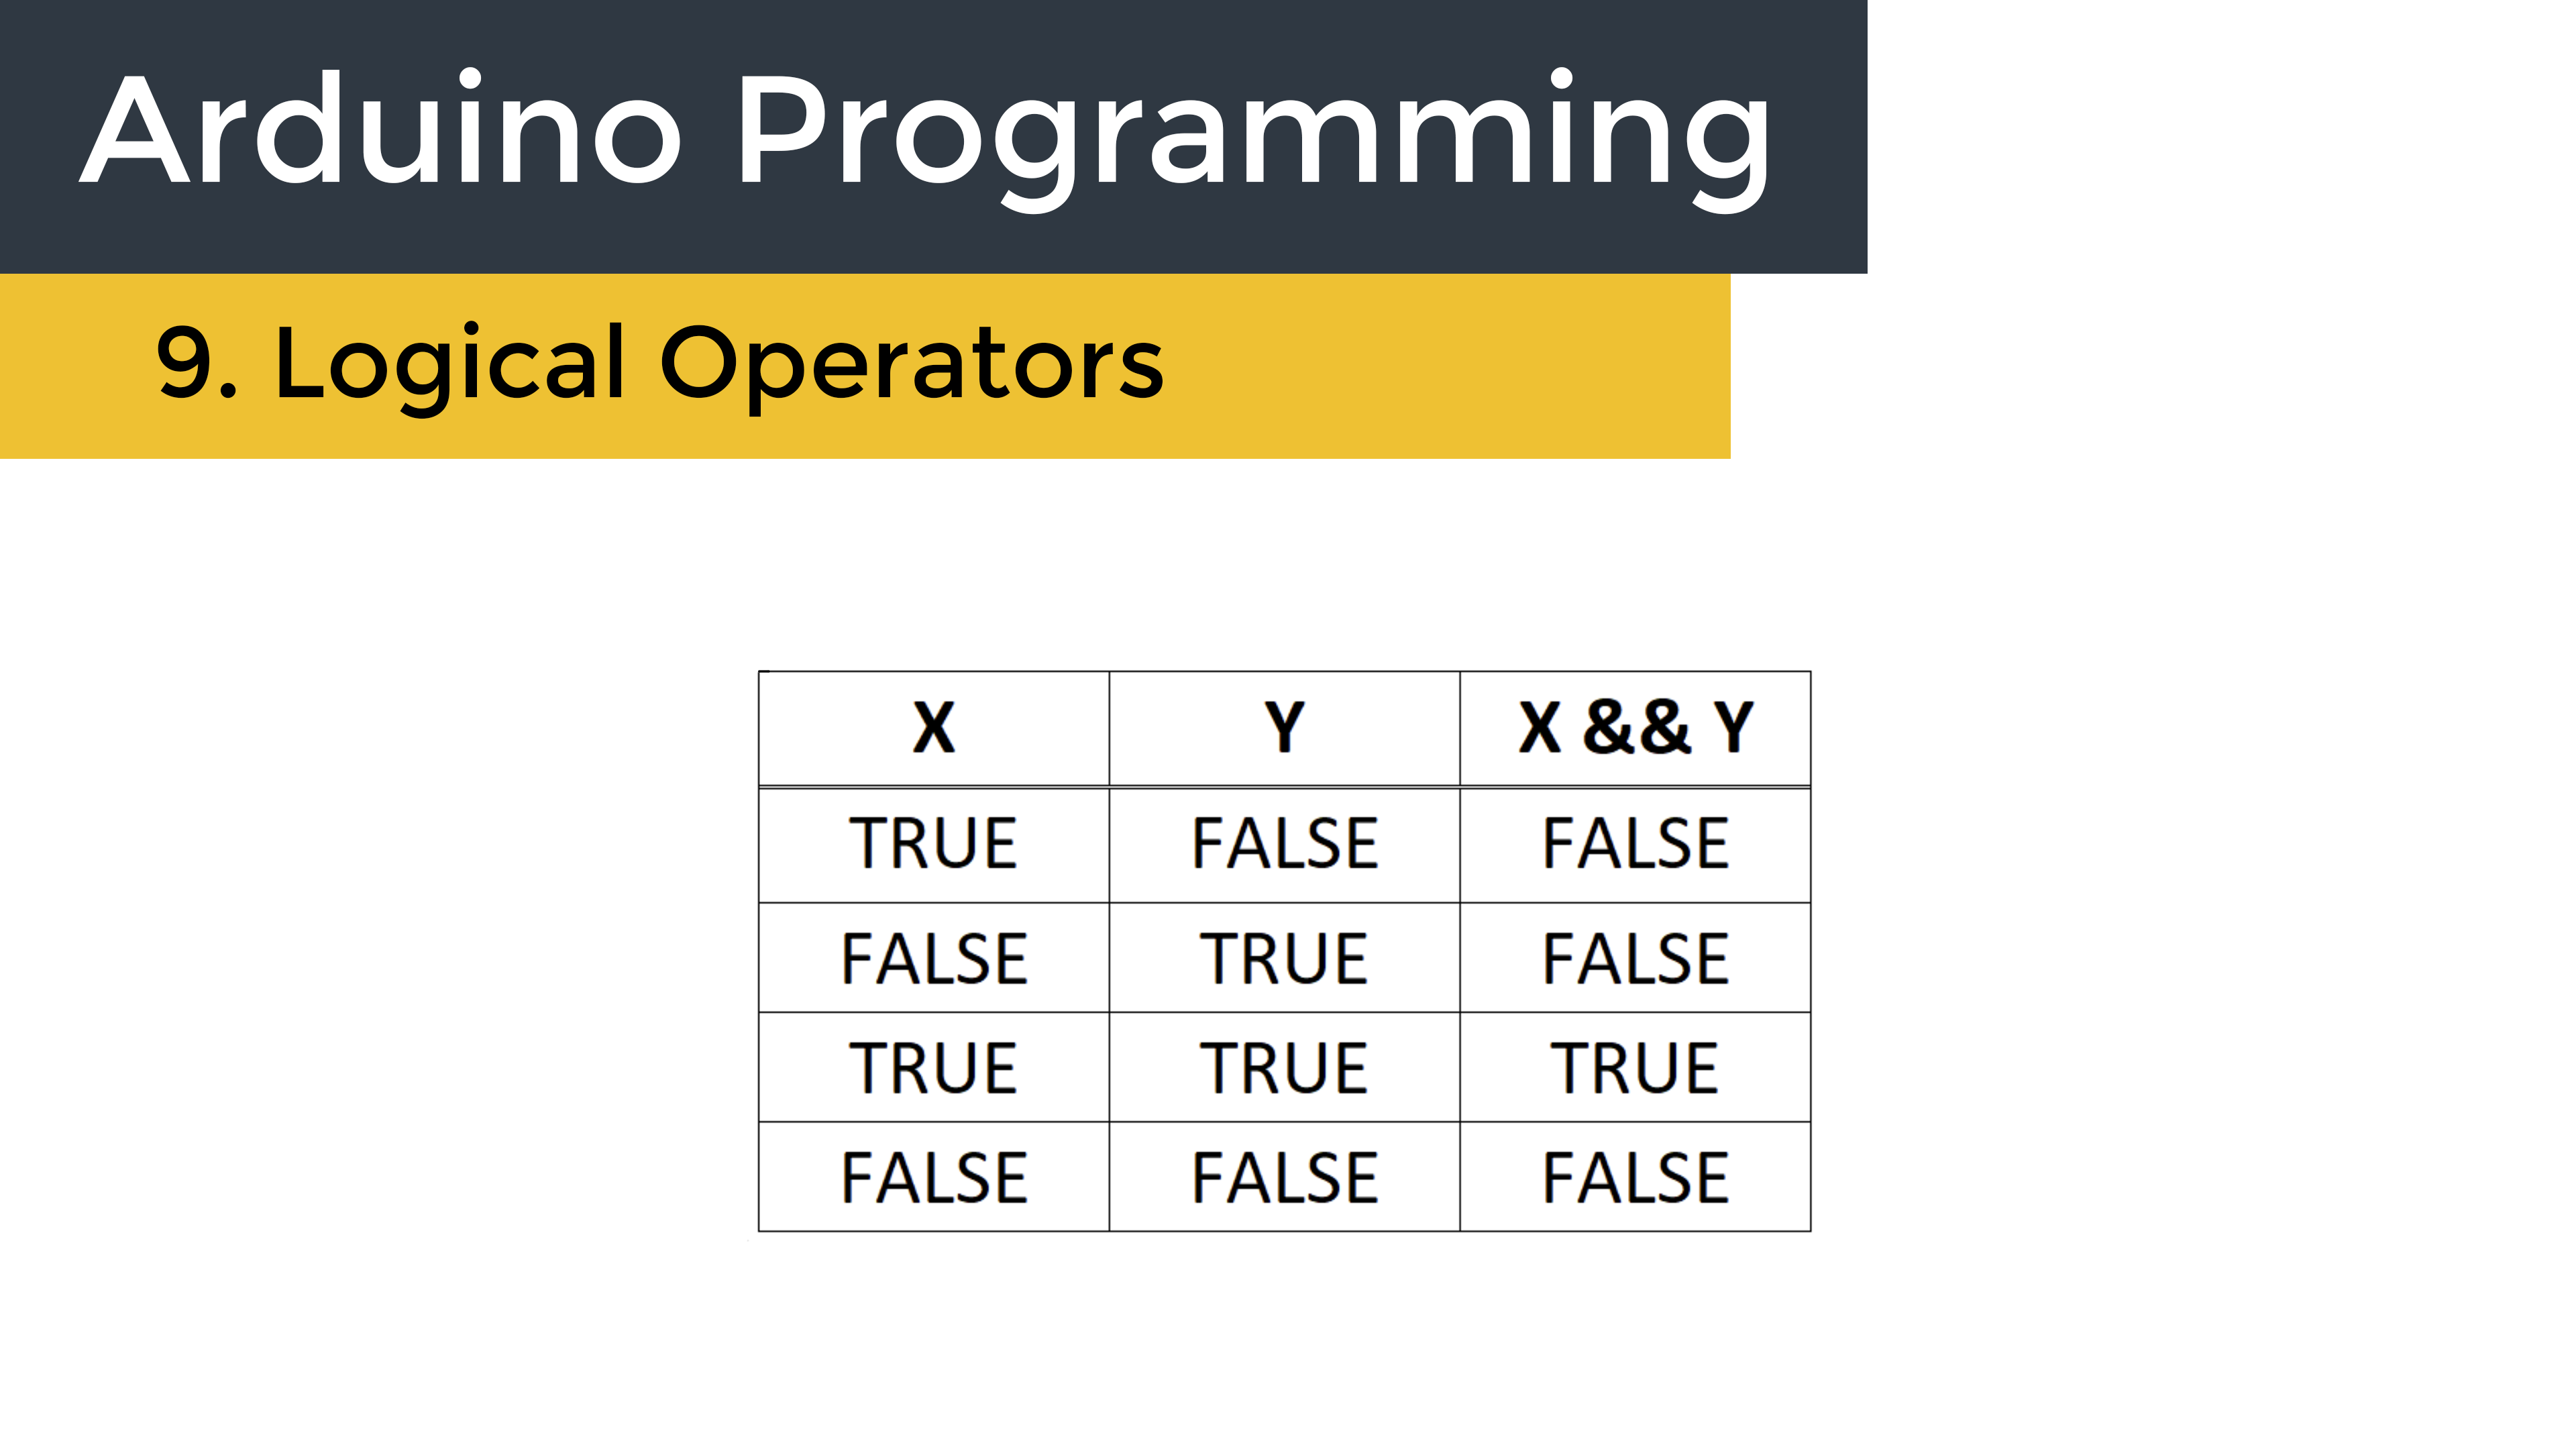 Using Logical Operators in Arduino Programming